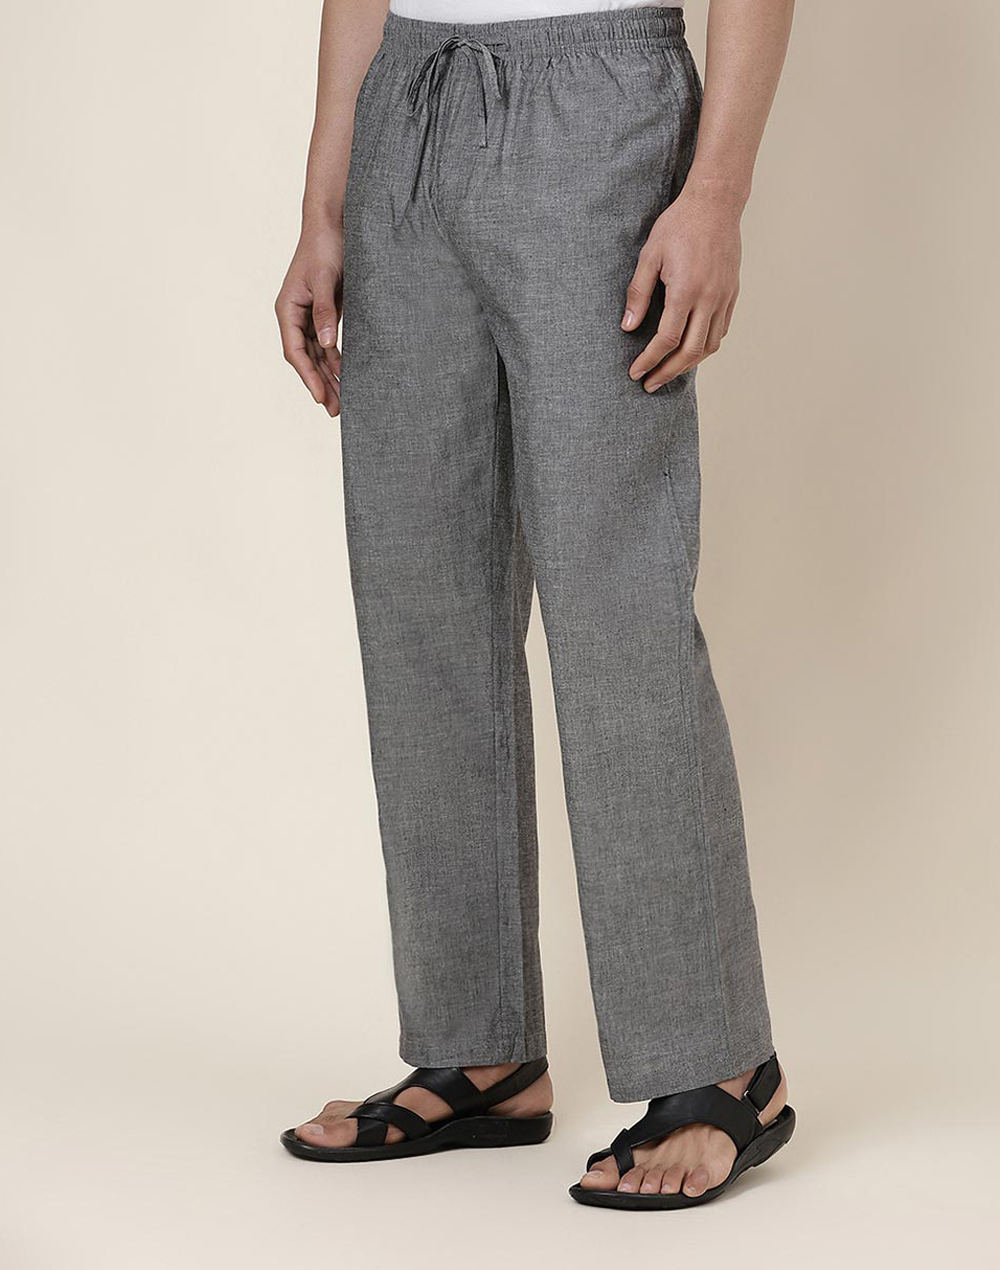 Grey Cotton Drawstring Pants